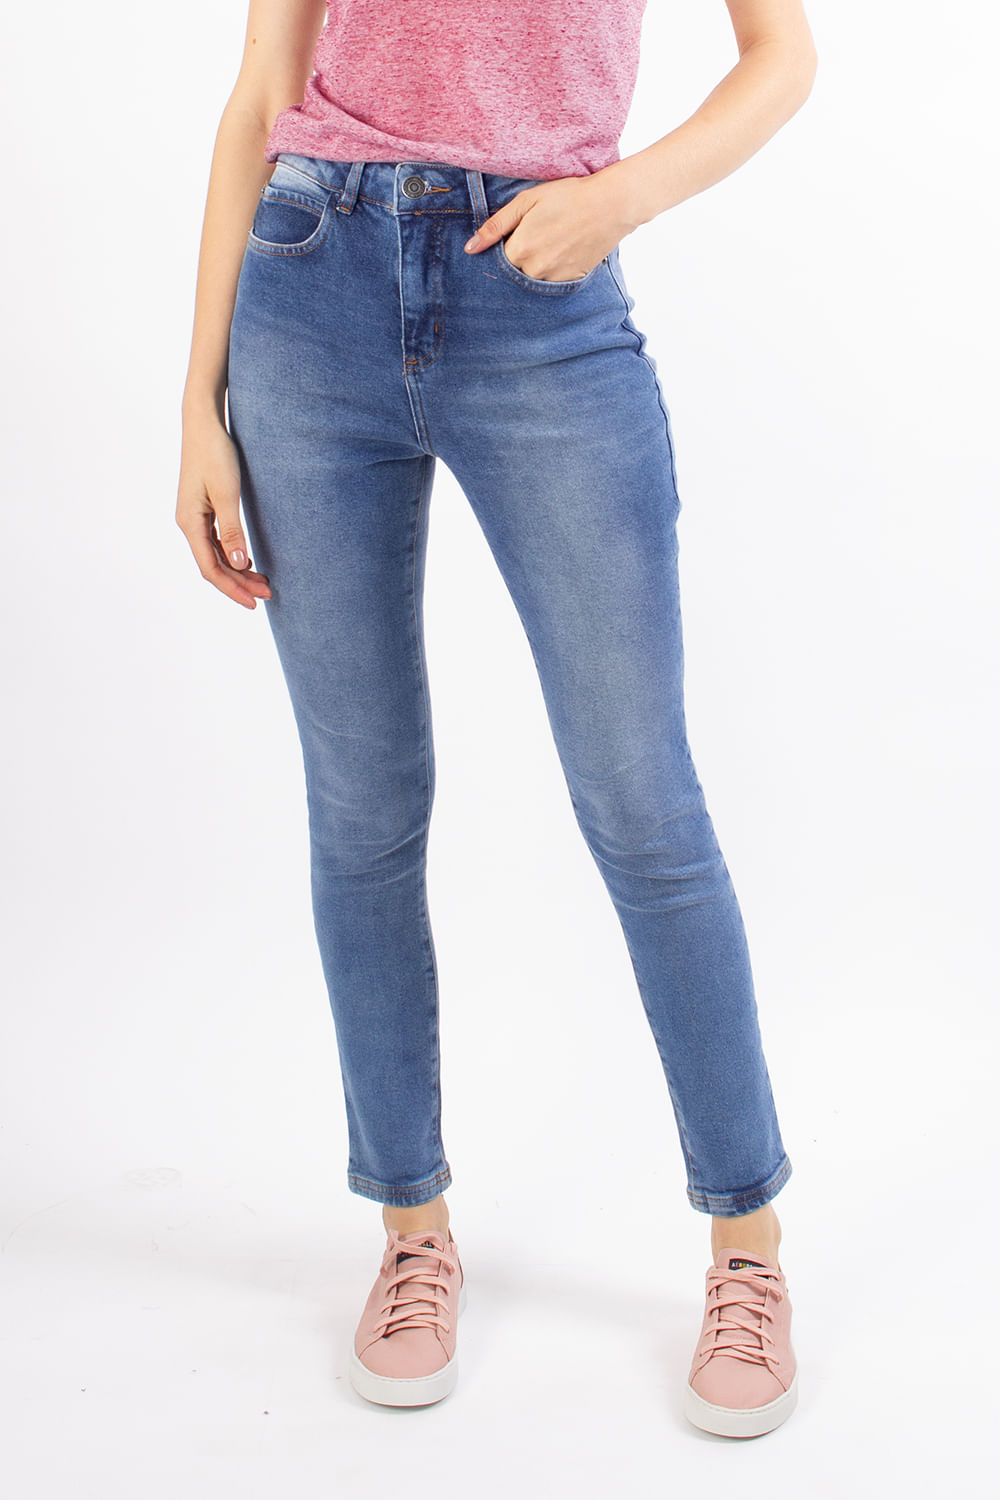 Calça Feminina Aeropostale Jeans Wide Leg - 98812 - Calça Jeans